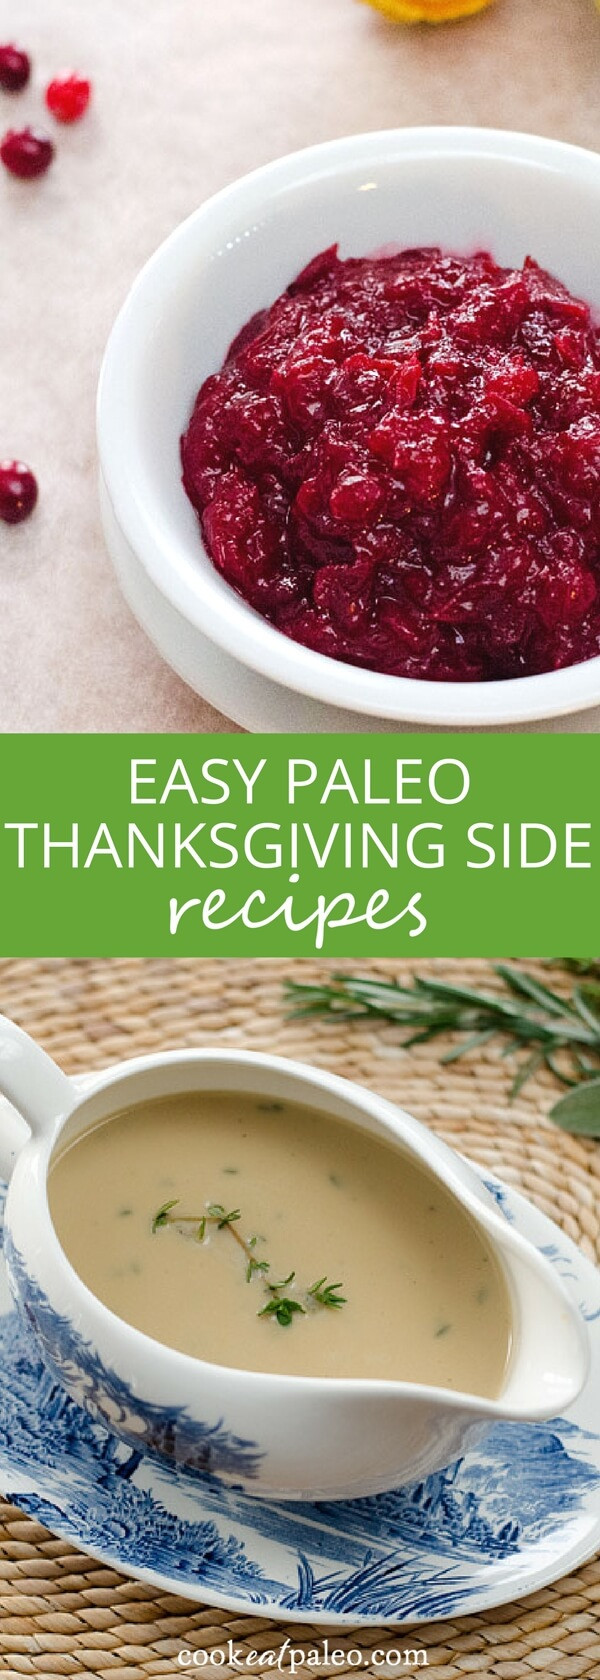 Paleo Thanksgiving Recipes
 15 Easy Paleo Thanksgiving Sides